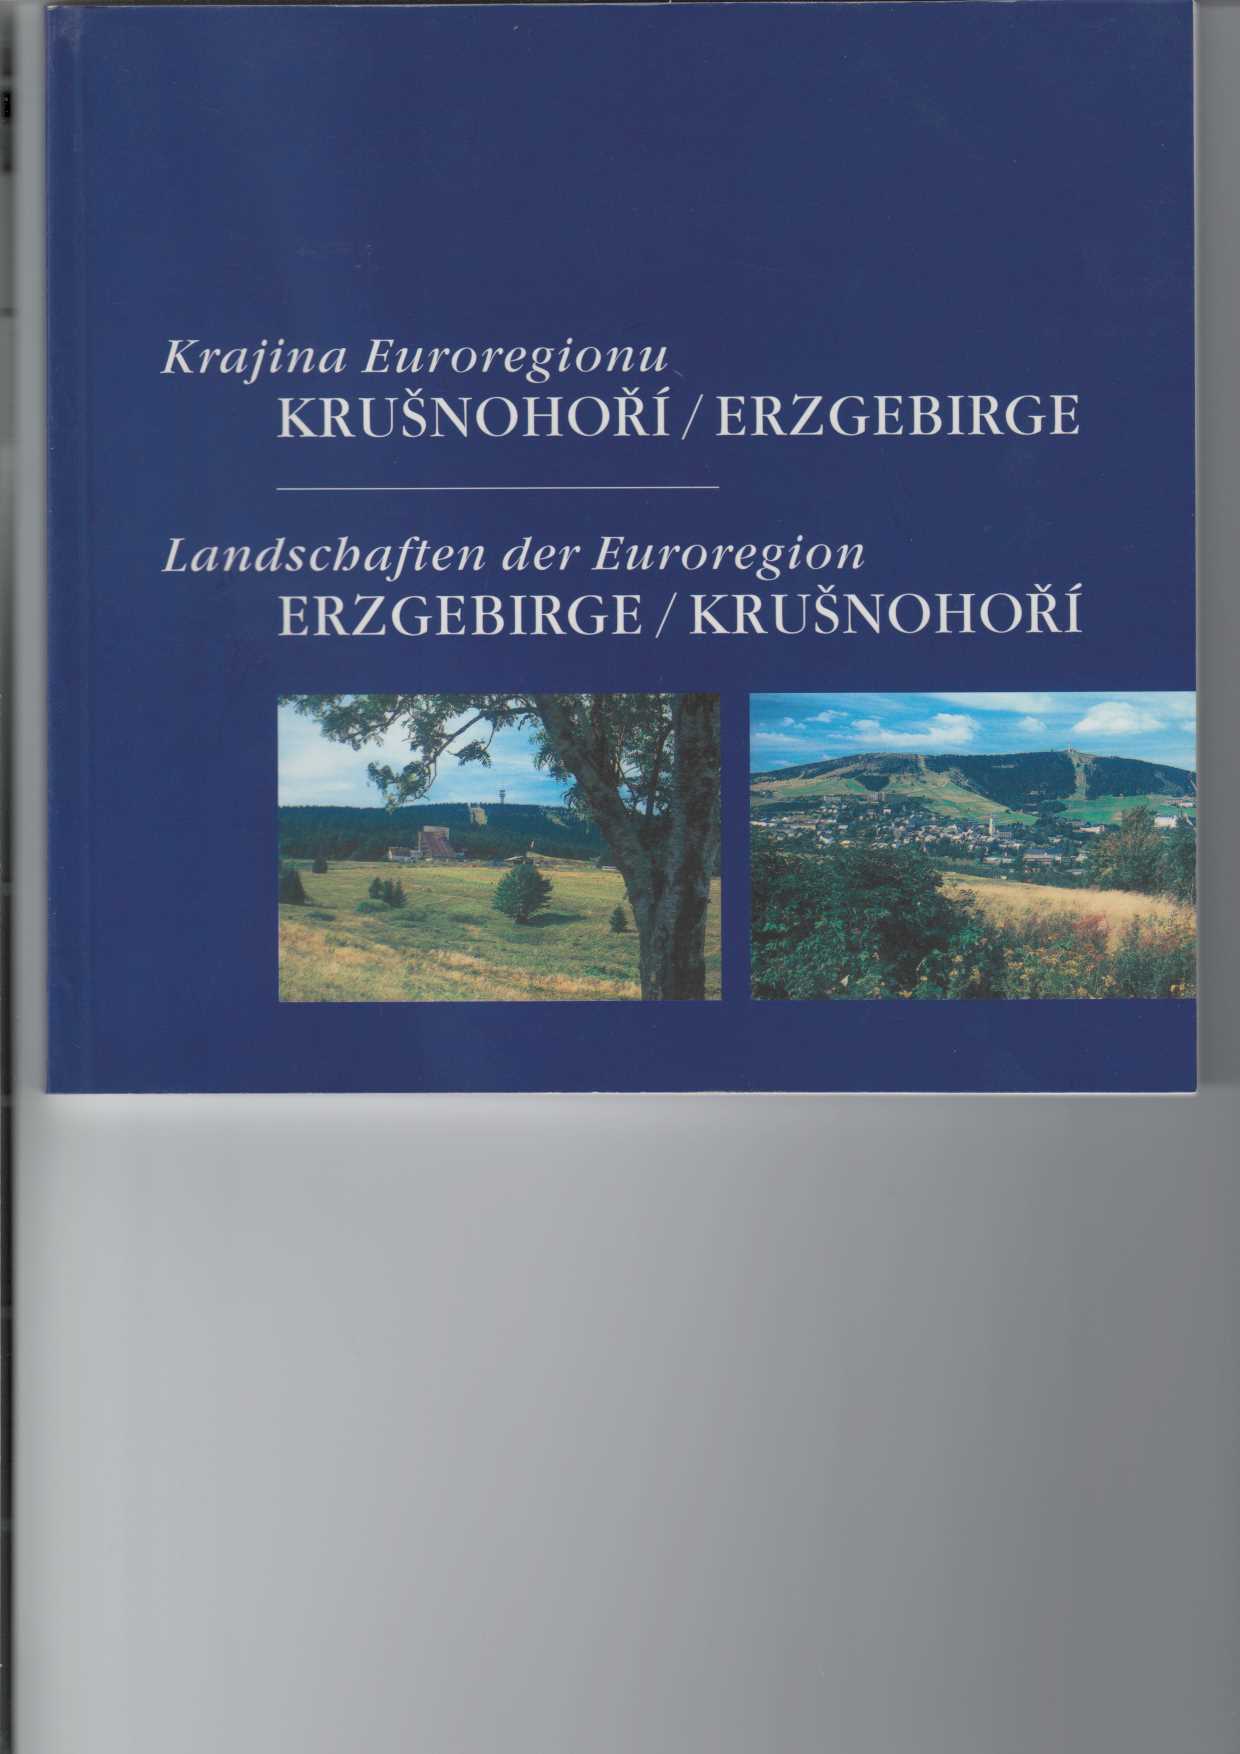 Krajina Euroregionu Krusnohori / Erzgebirge – Landschaften der Euroregion Erzgebirge / Krusnohori.